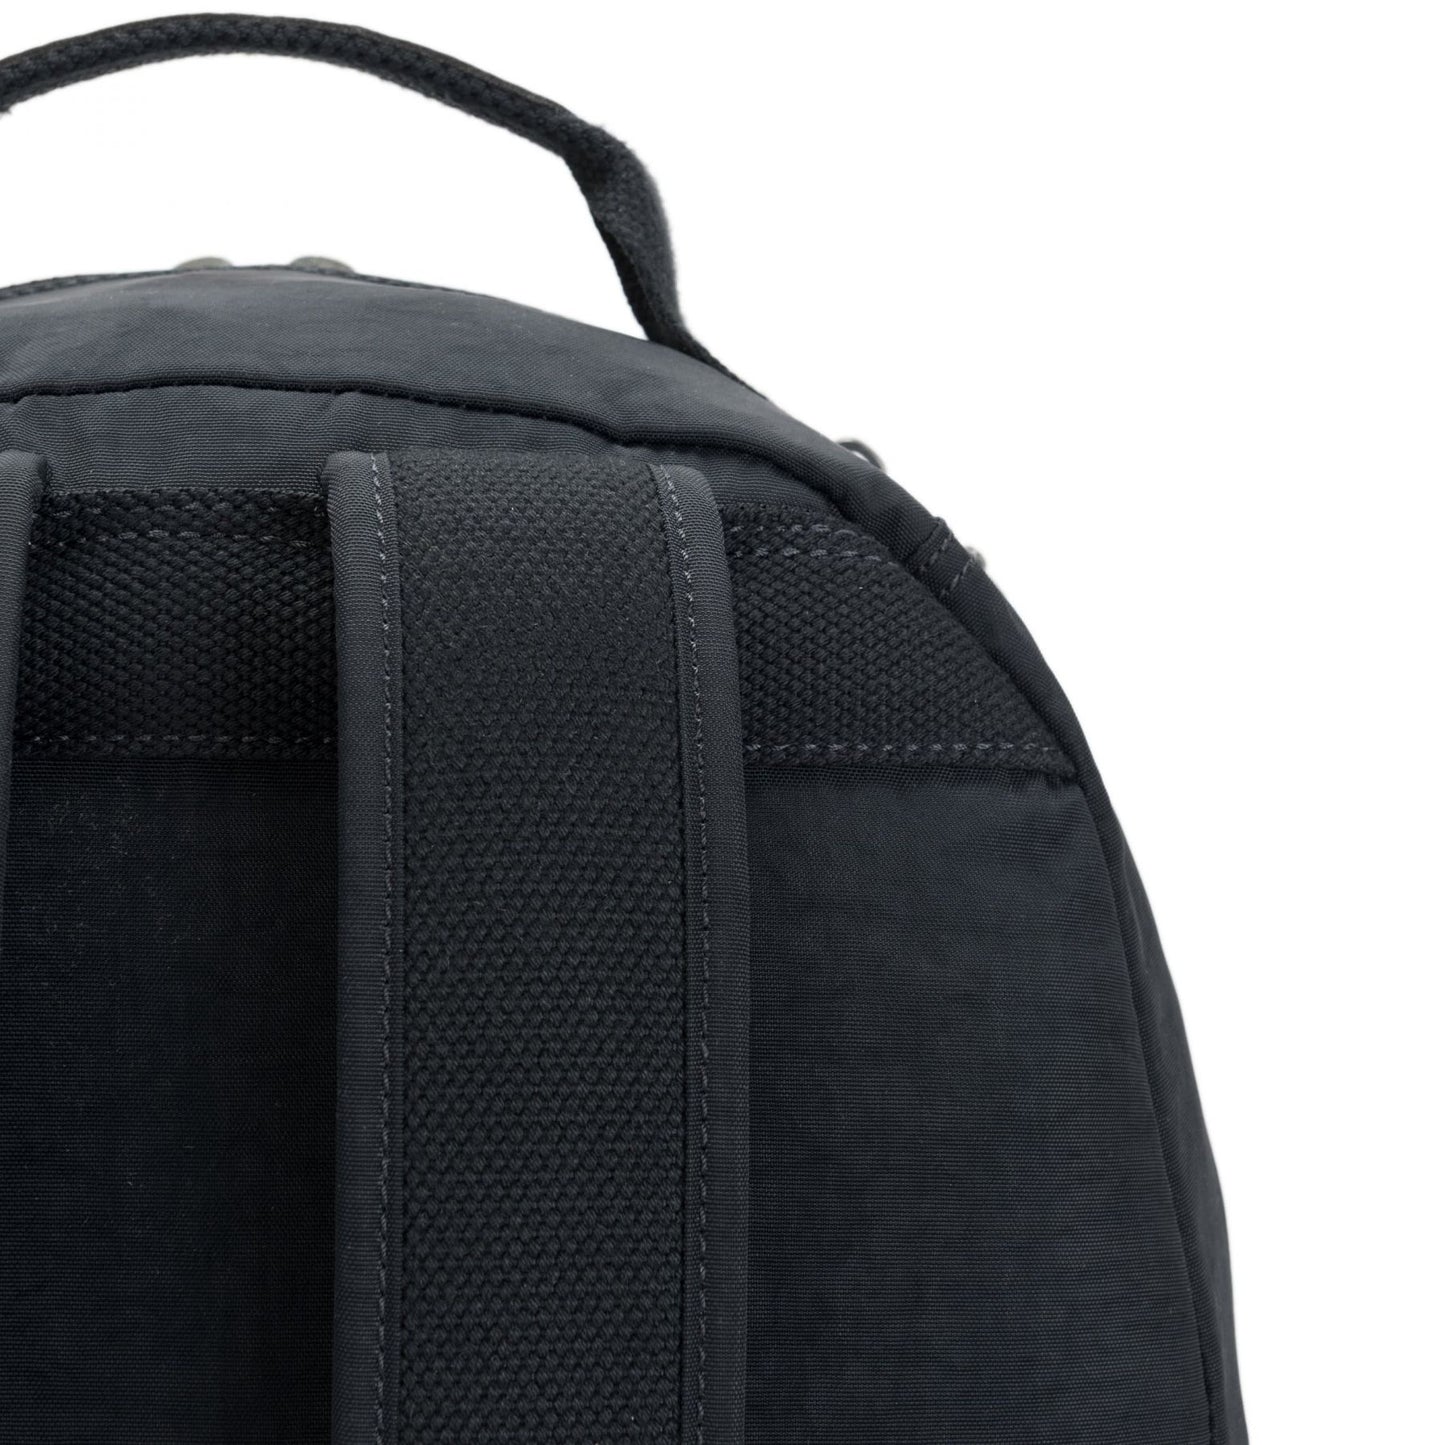 SEOUL Large backpack with Laptop Protection Blue Bleu 2 - BambiniJO | Buy Online | Jordan